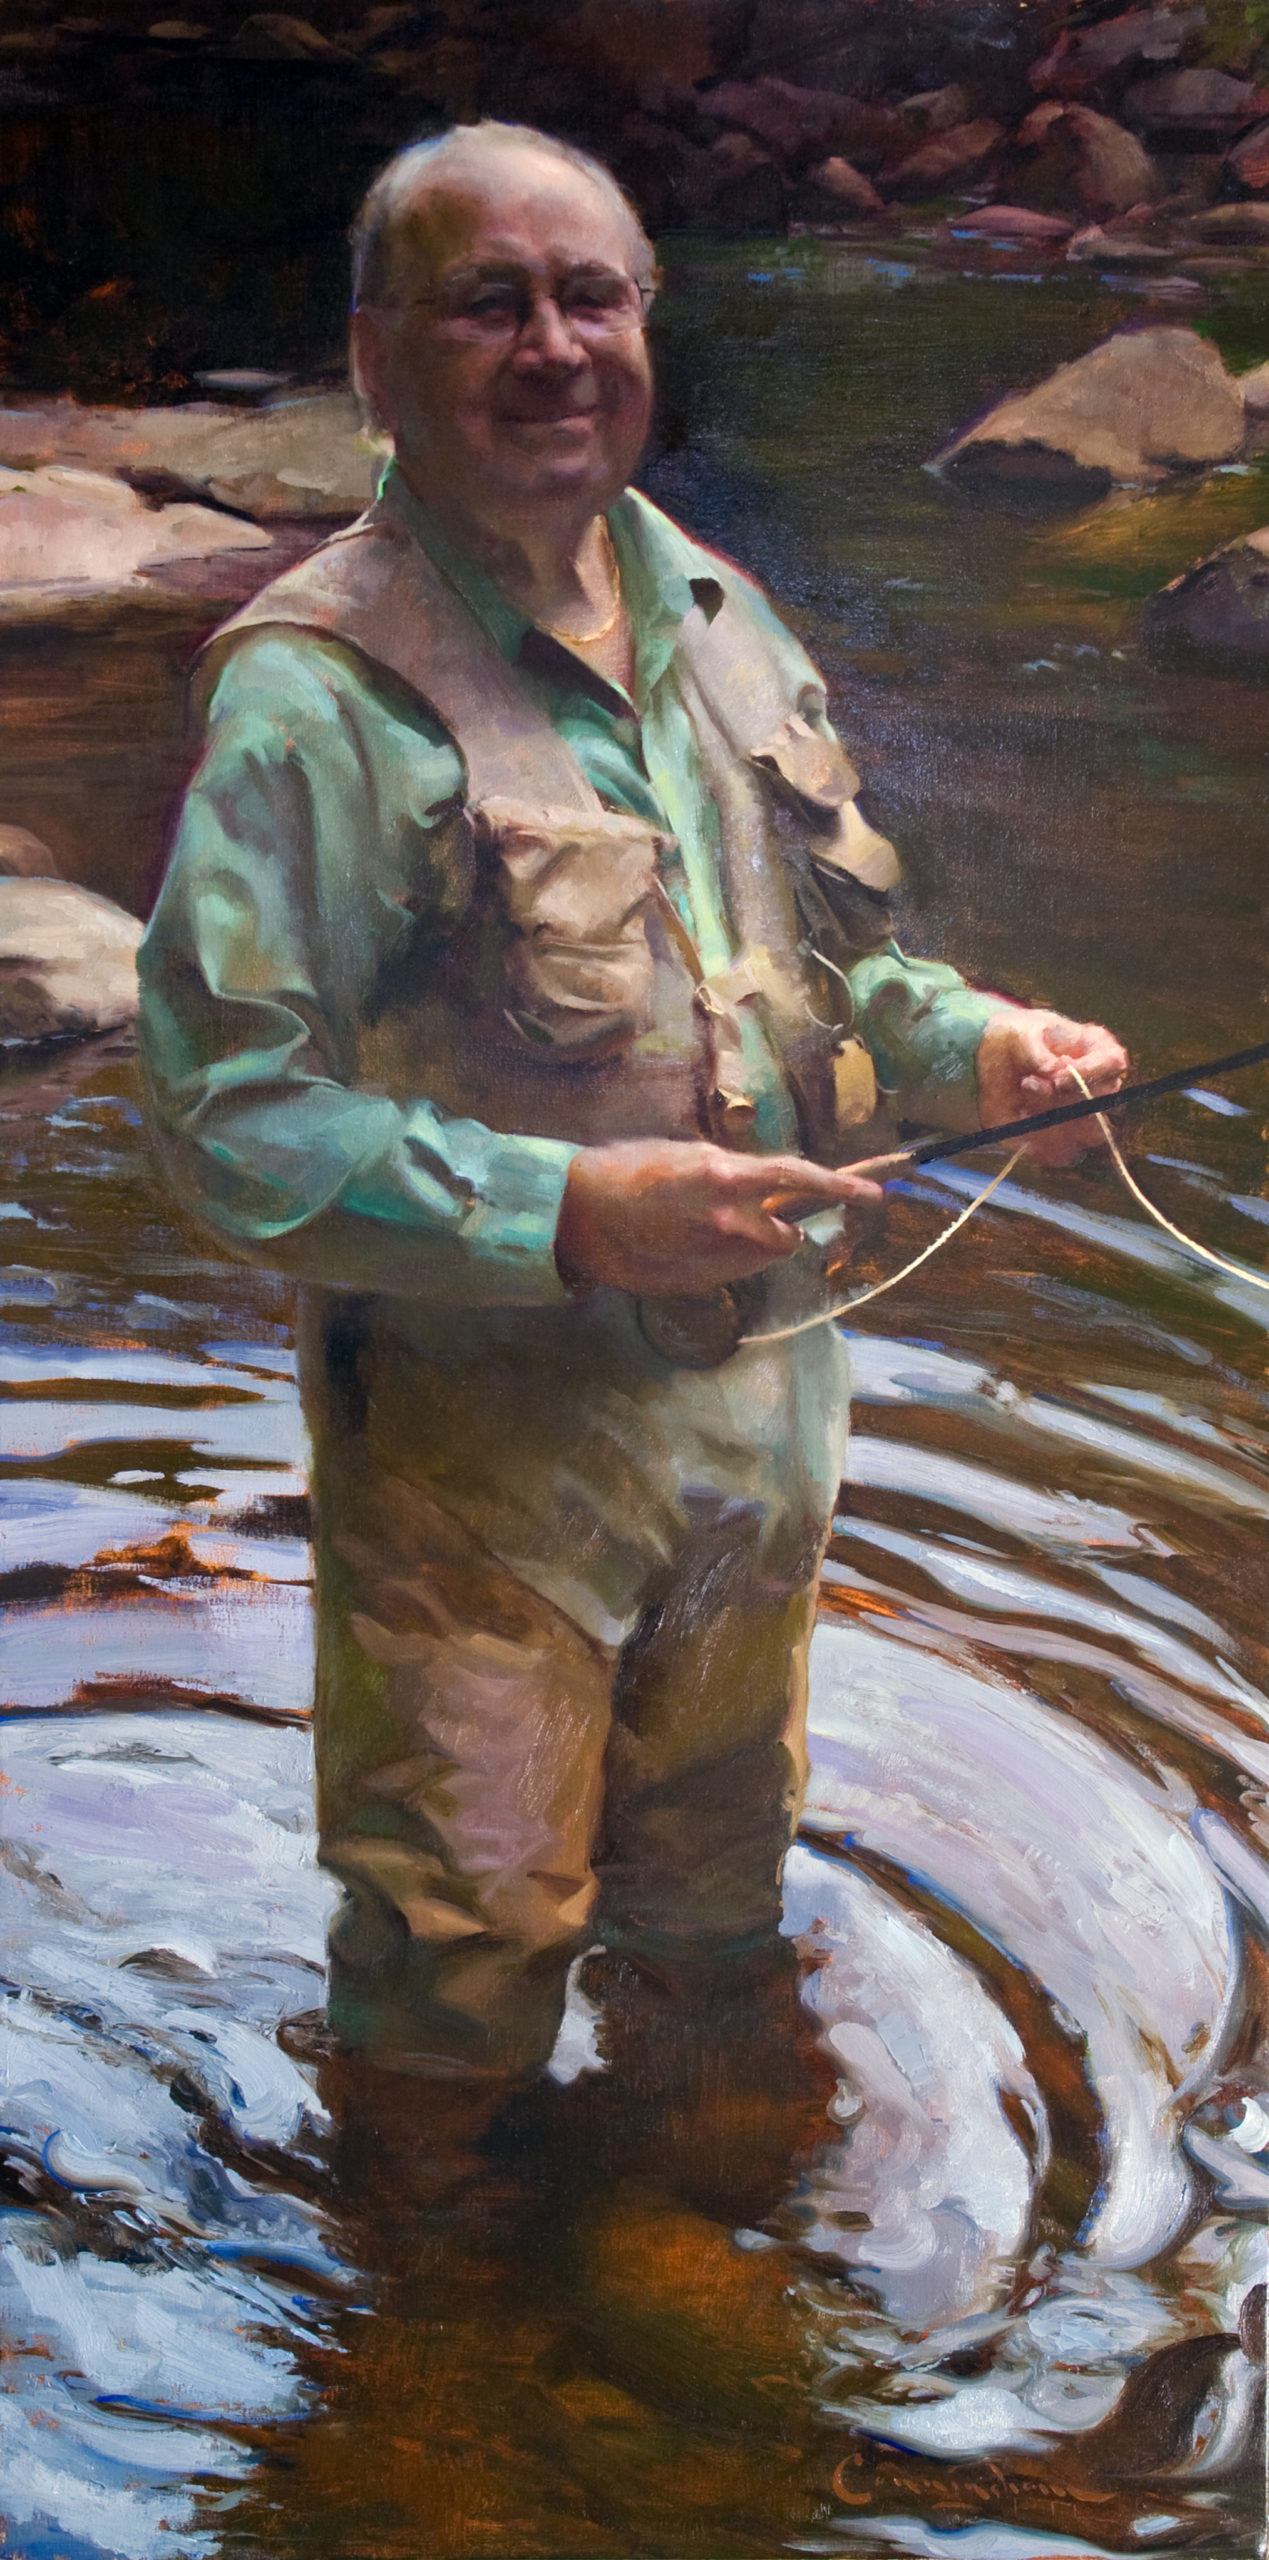 Representational art - painting of a fisherman